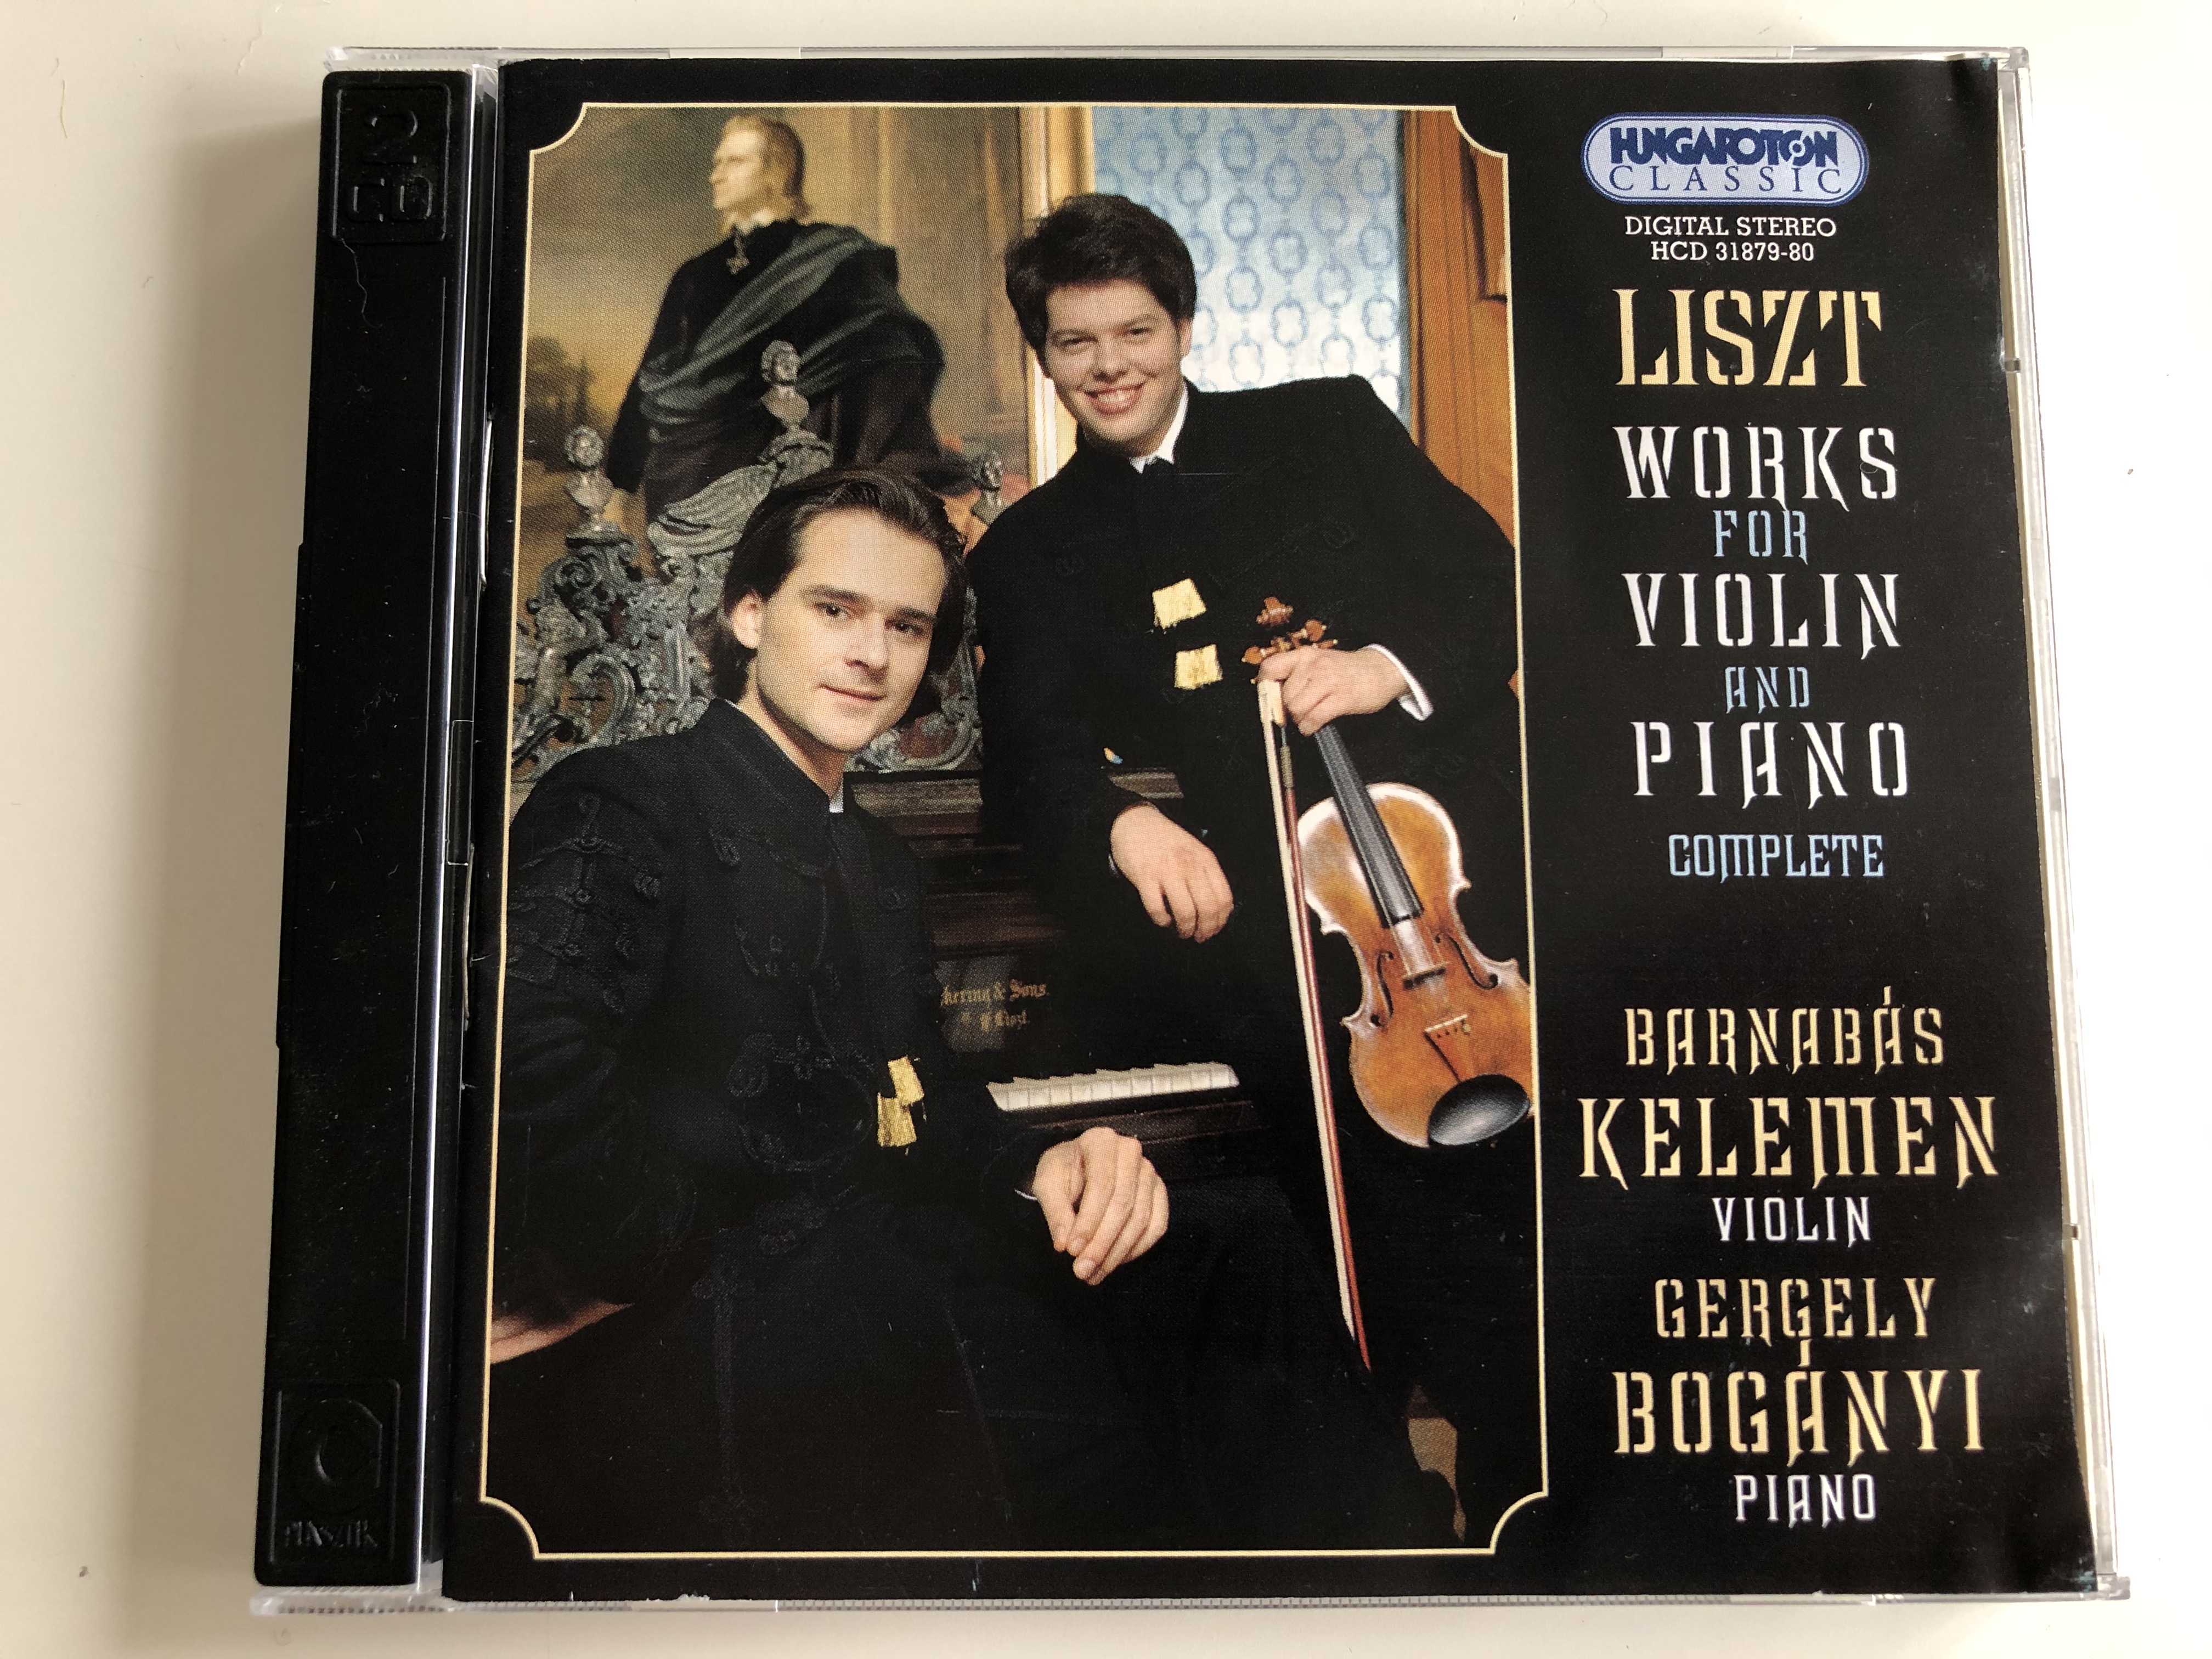 liszt-works-for-violin-and-piano-complete-violin-barnab-s-kelemen-piano-gergely-bog-nyi-hungaroton-2x-audio-cd-2000-stereo-hcd-31879-80-1-.jpg